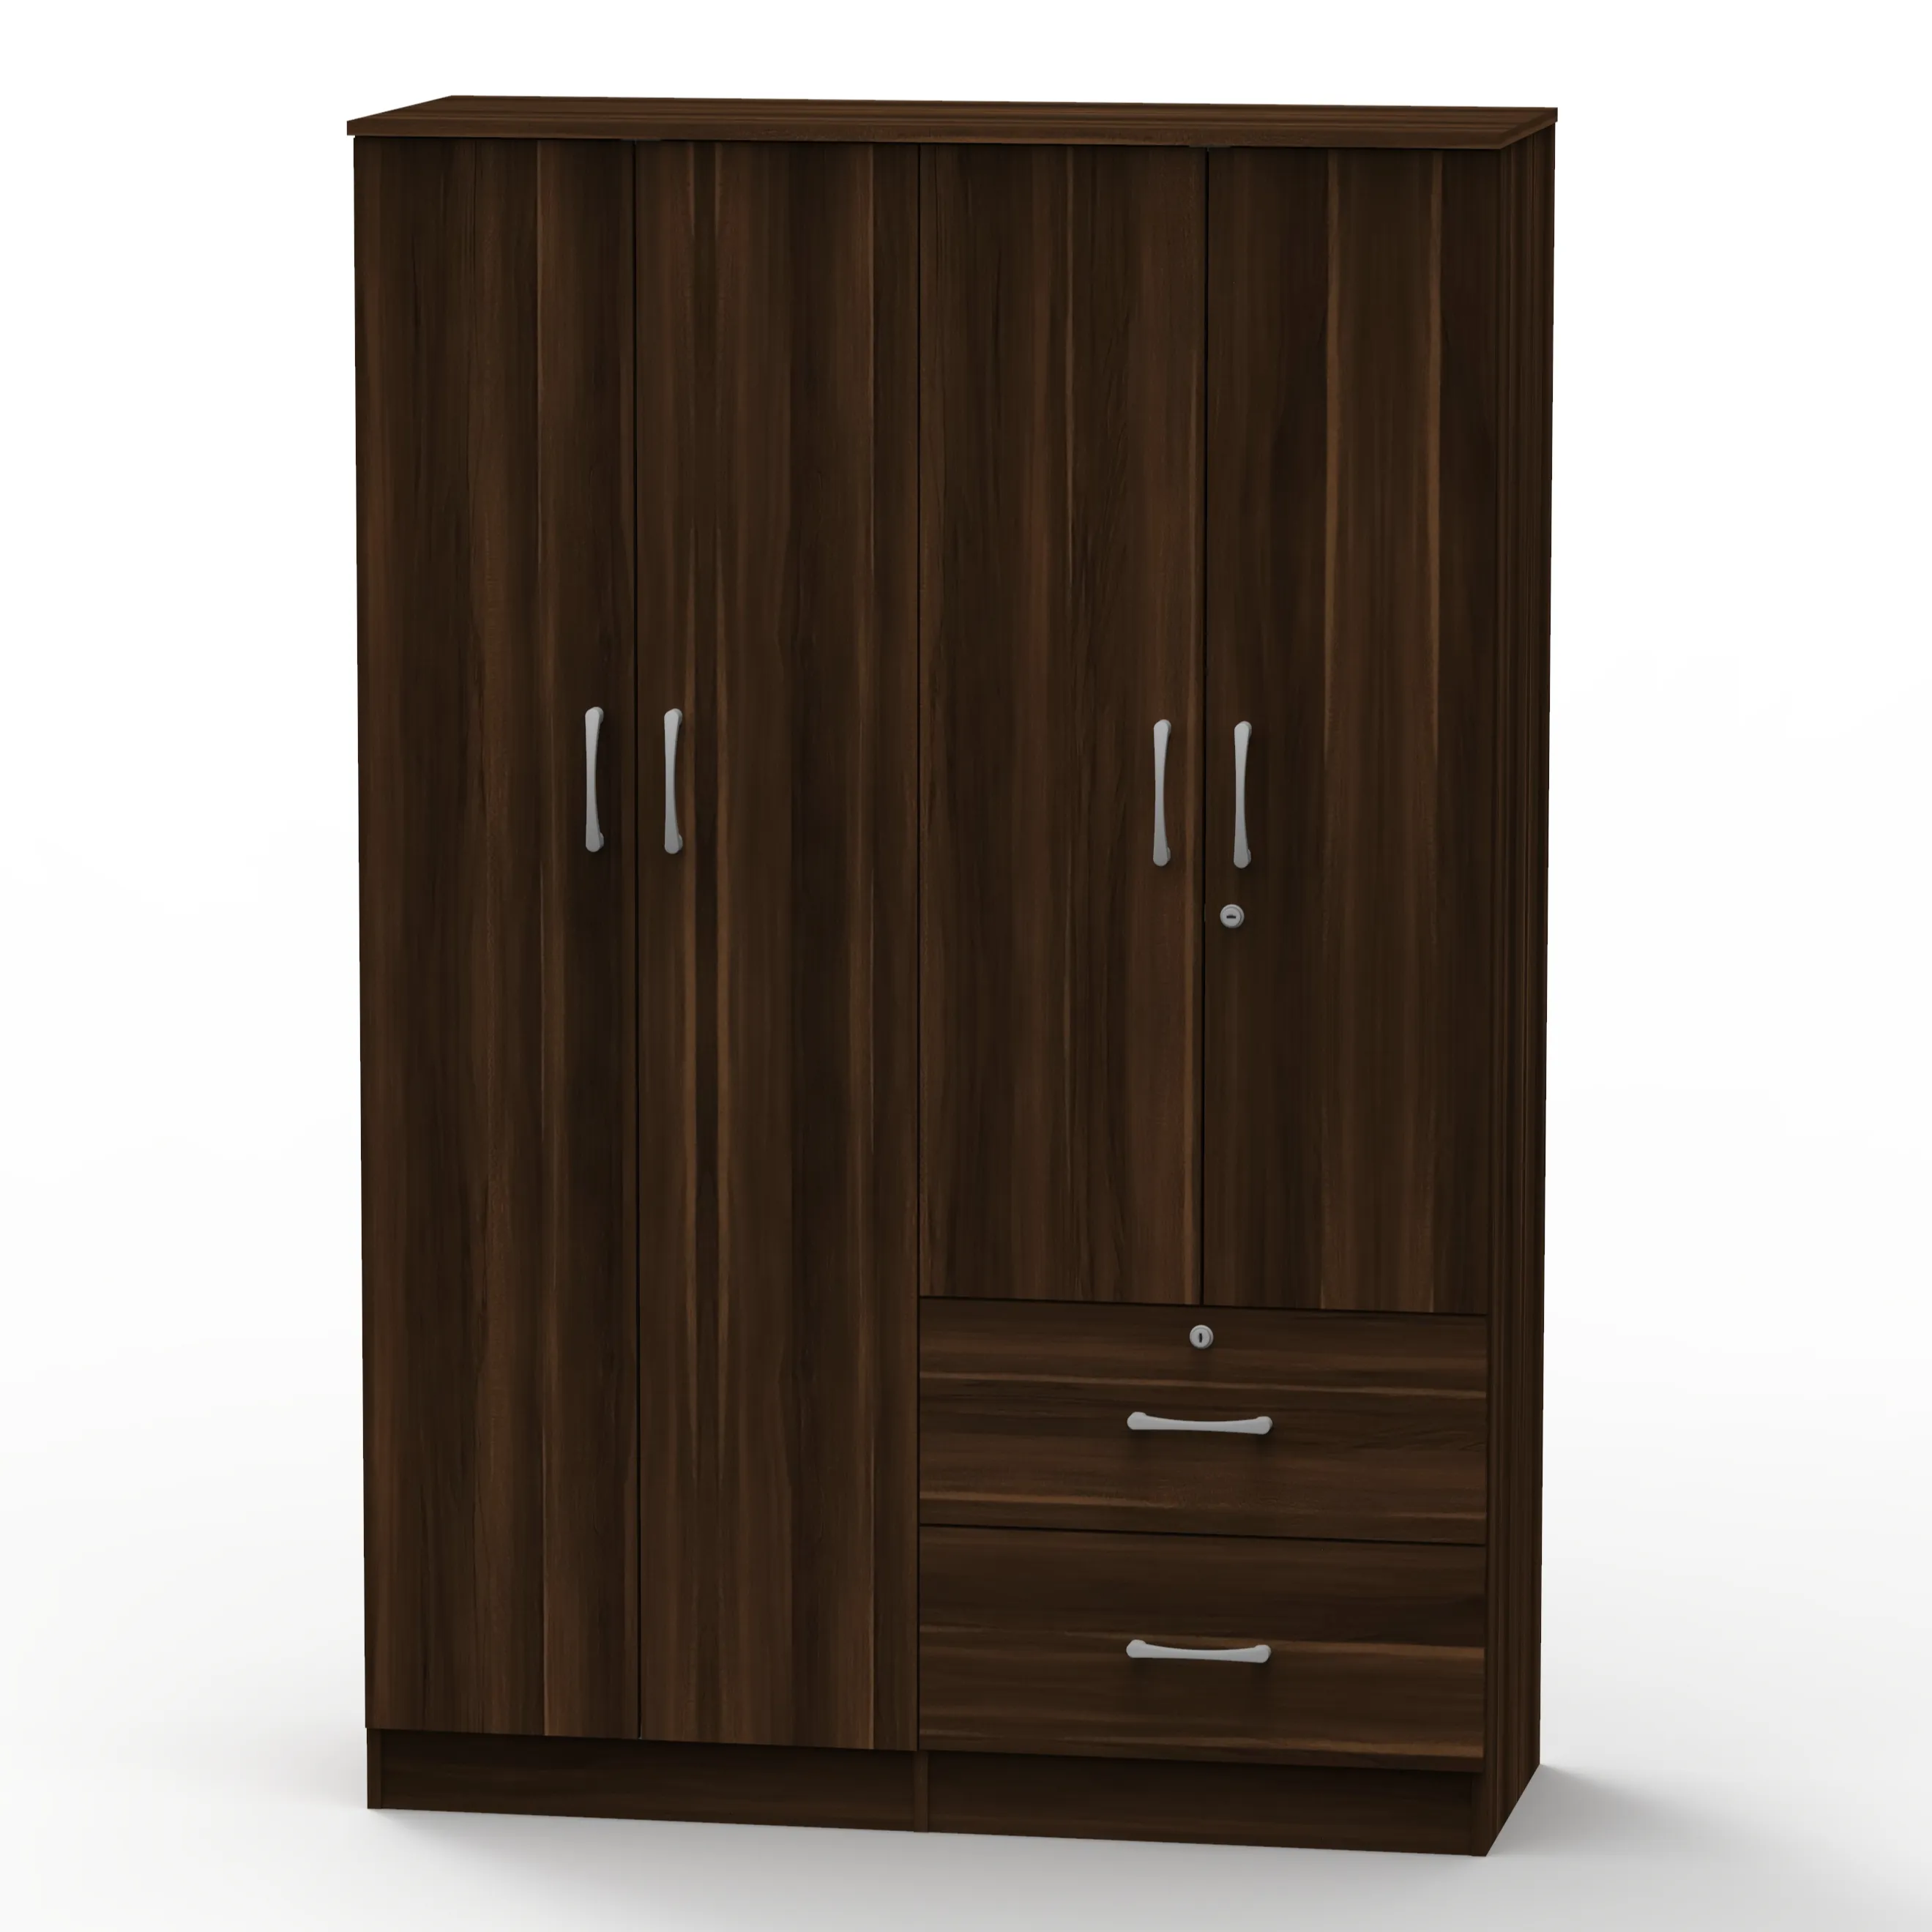 4 Door Multi Function Bedroom Wardrobe High Quality Malaysia Made DIY Furniture 1210